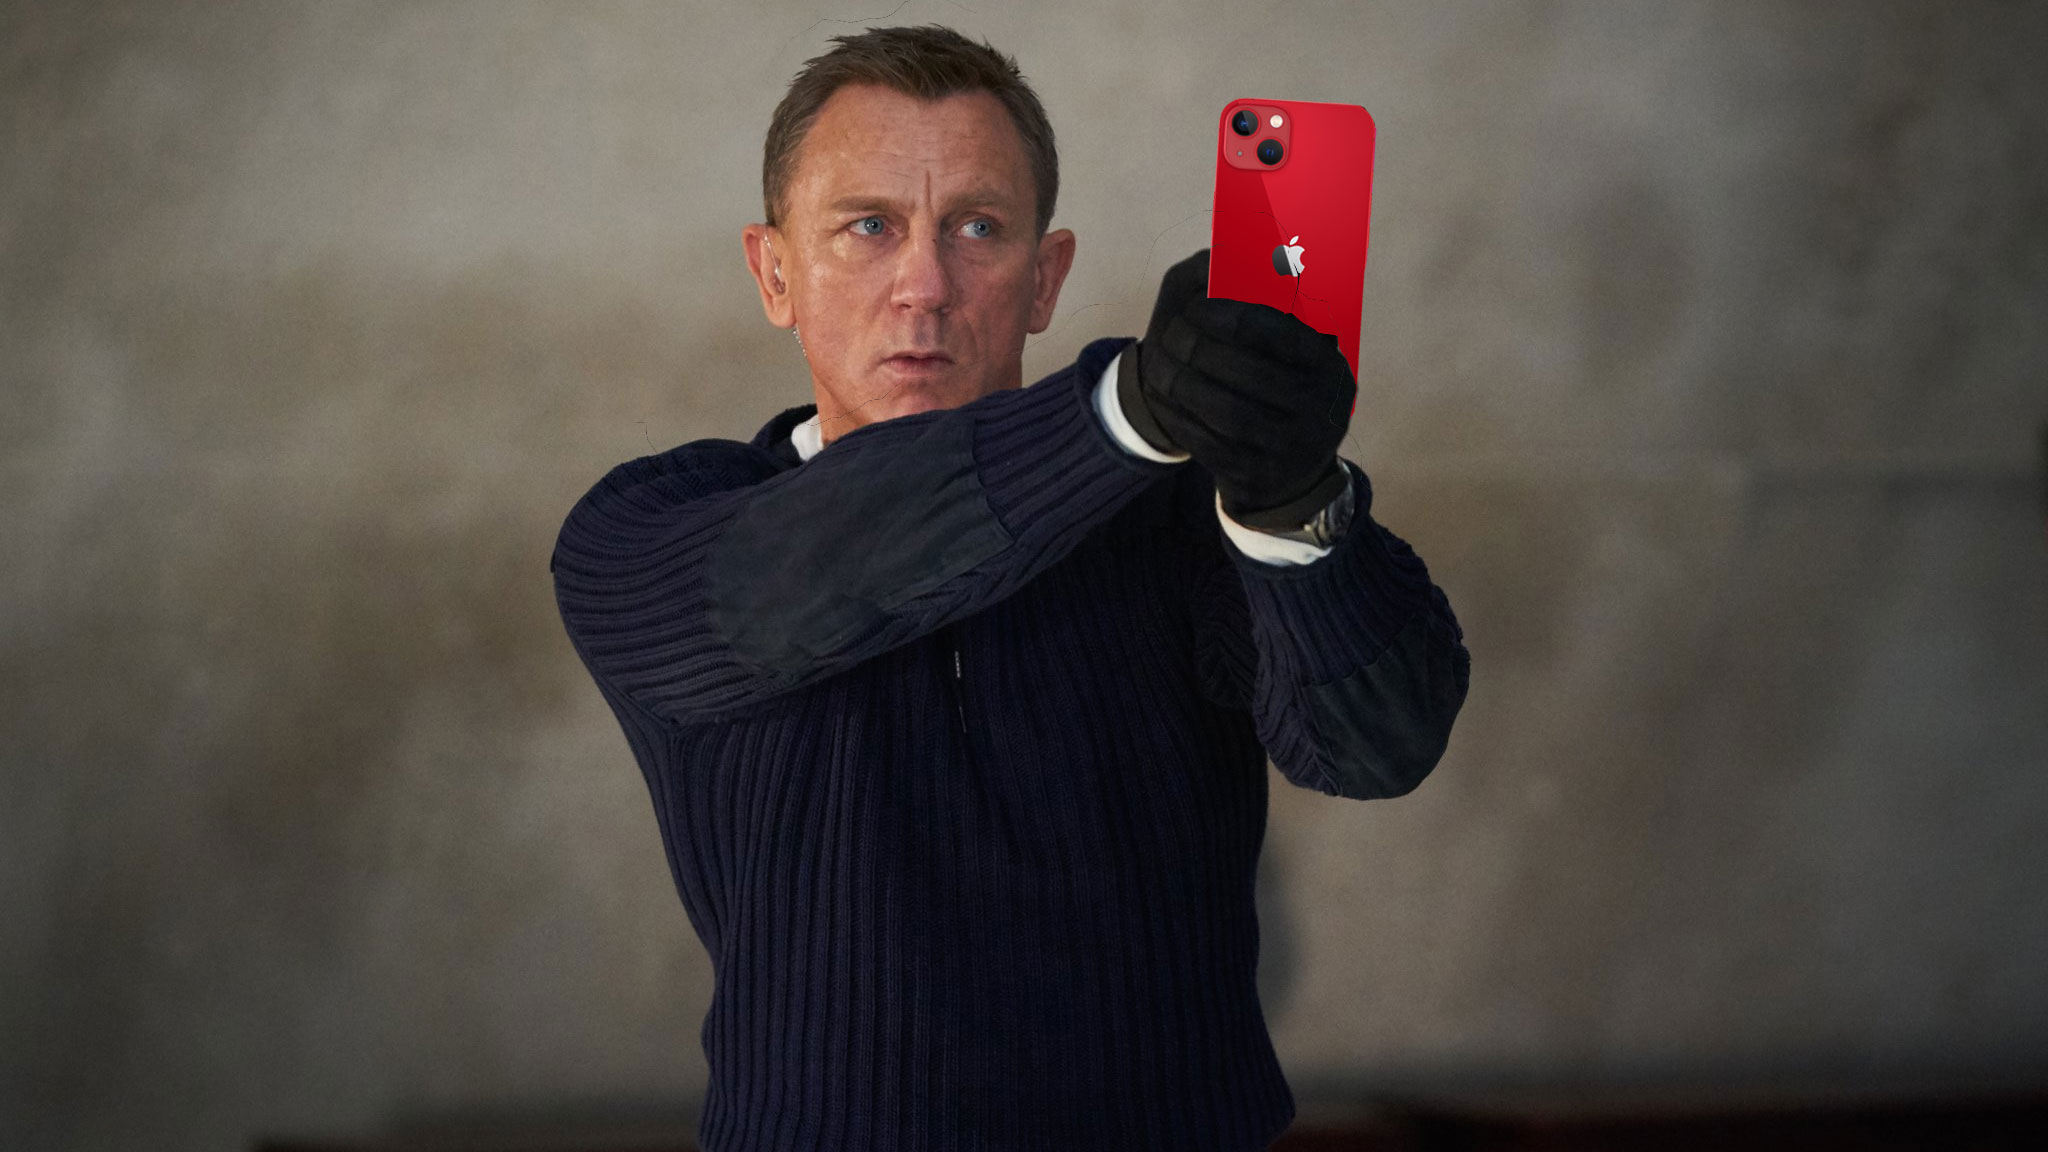 James Bond with an iPhone